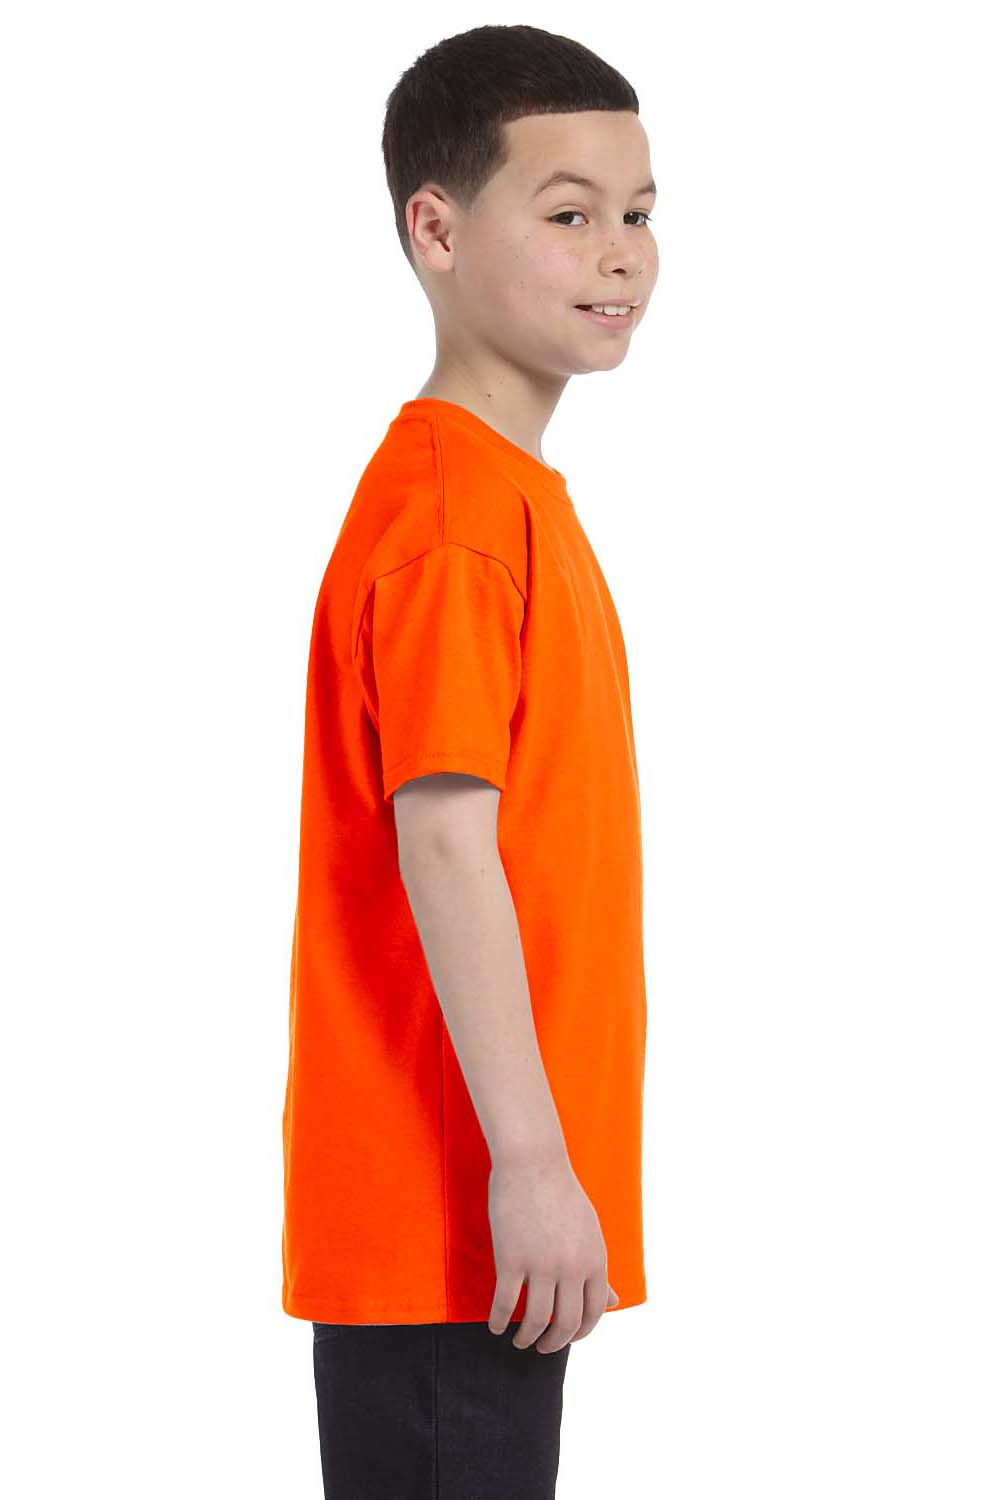 Jerzees 29B Youth Dri-Power Moisture Wicking Short Sleeve Crewneck T-Shirt Safety Orange Side